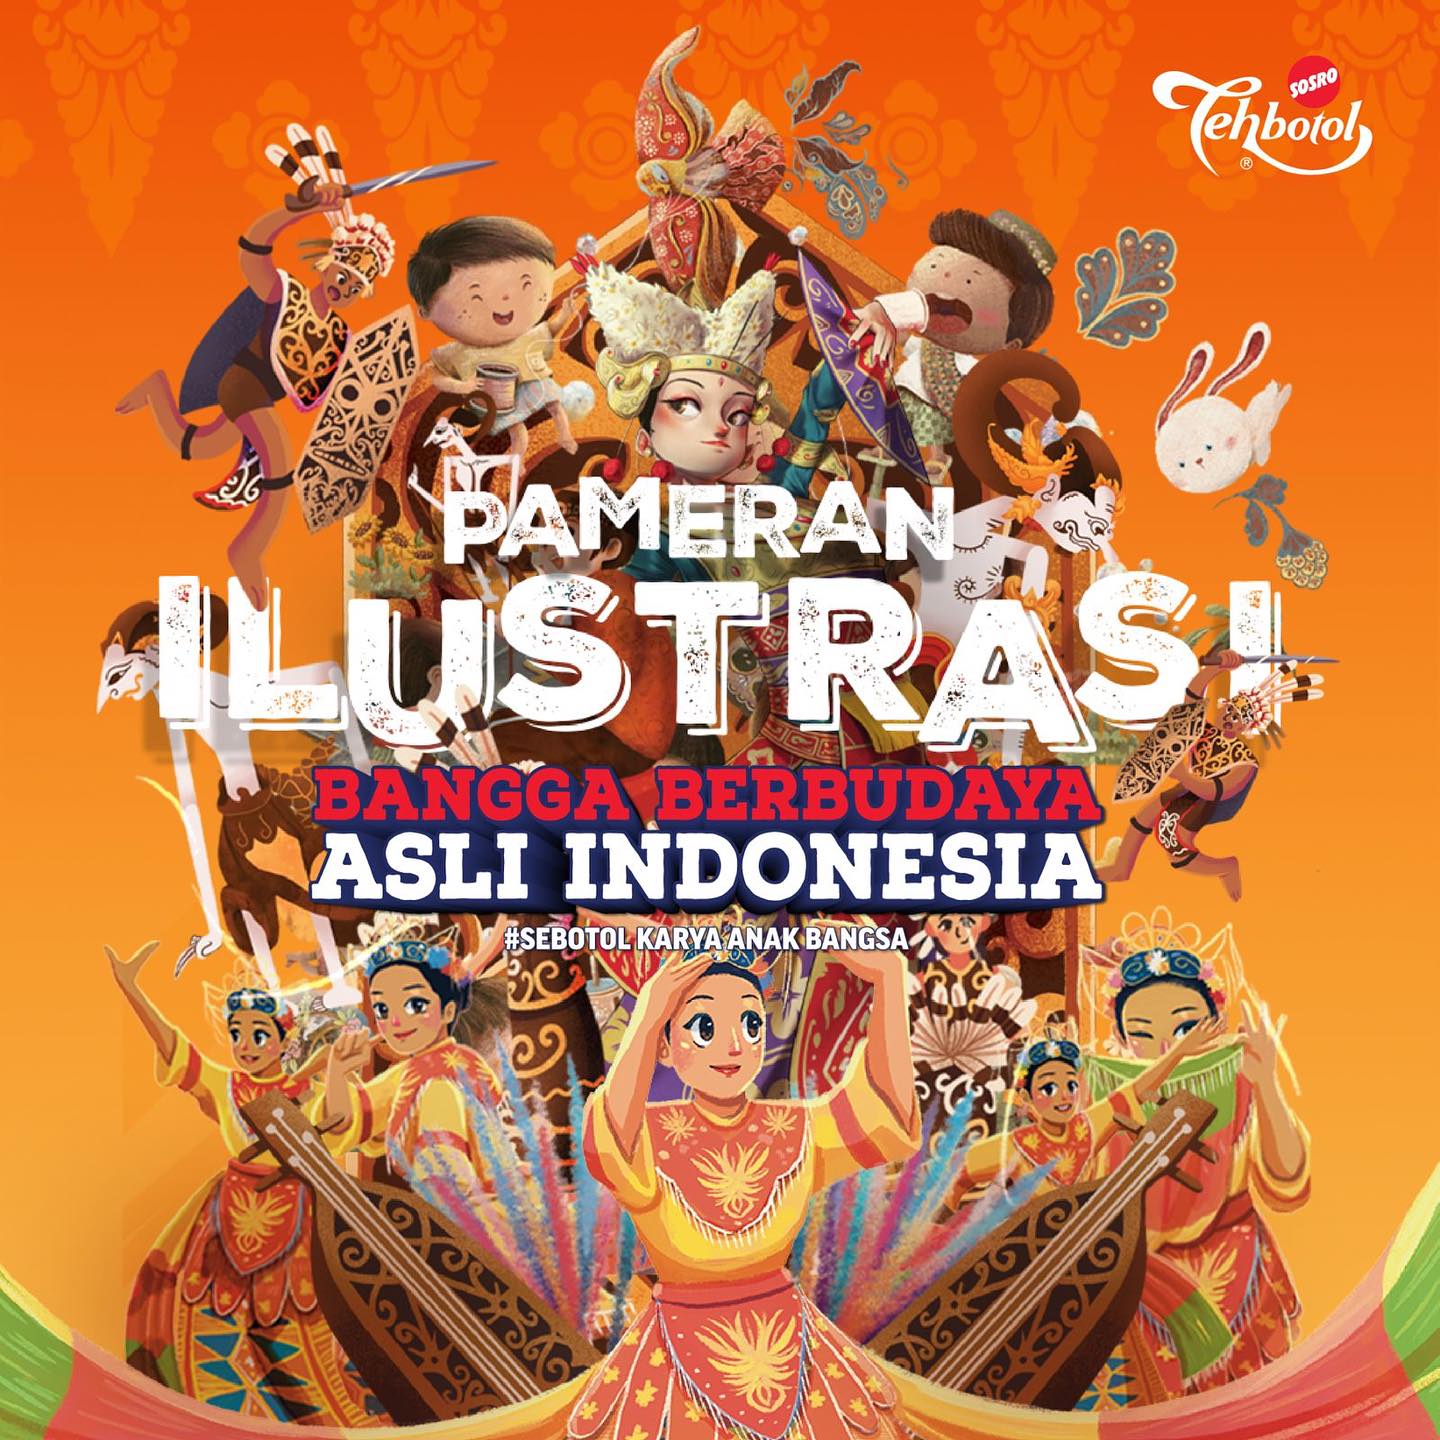 Event Jakarta Pameran Ilustrasi “Bangga Berbudaya Asli Indonesia”